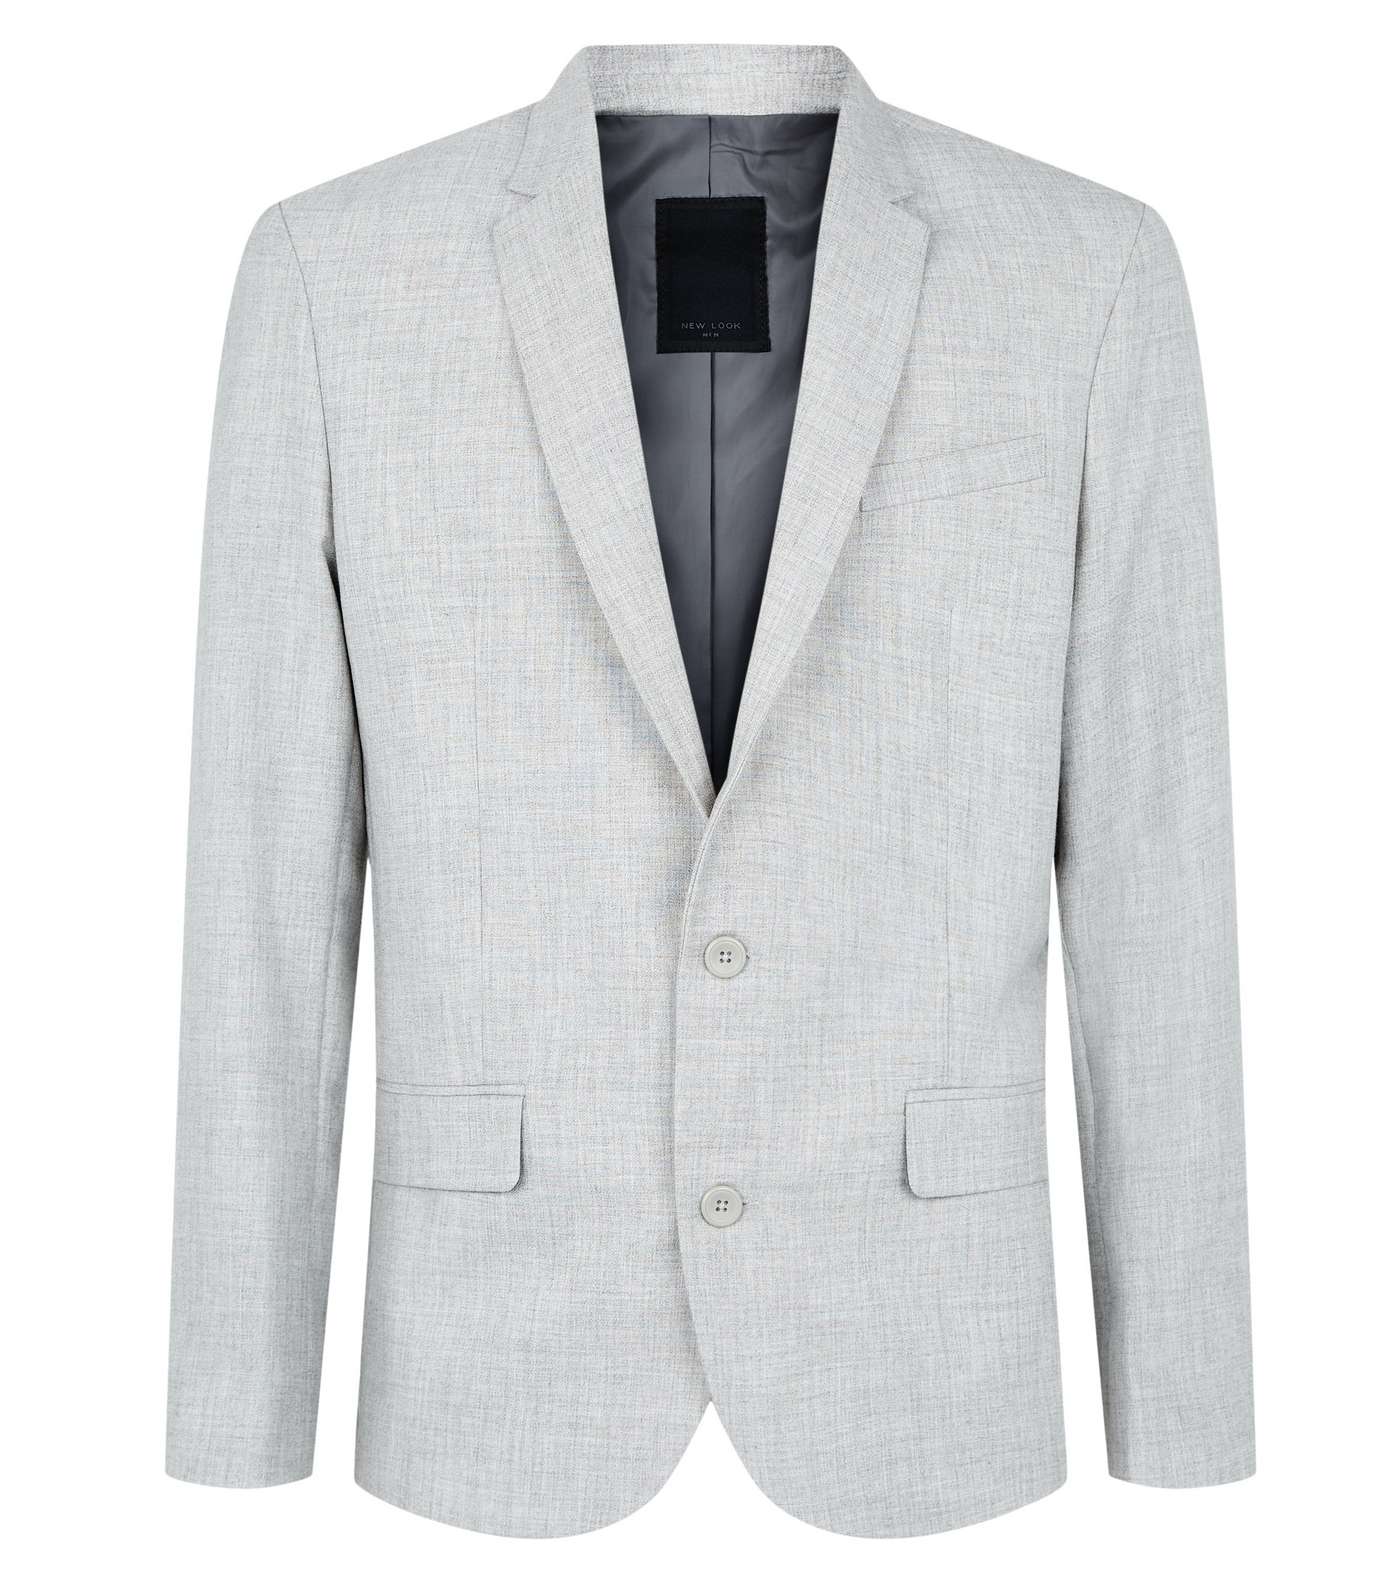 Light Grey Suit Jacket Image 4